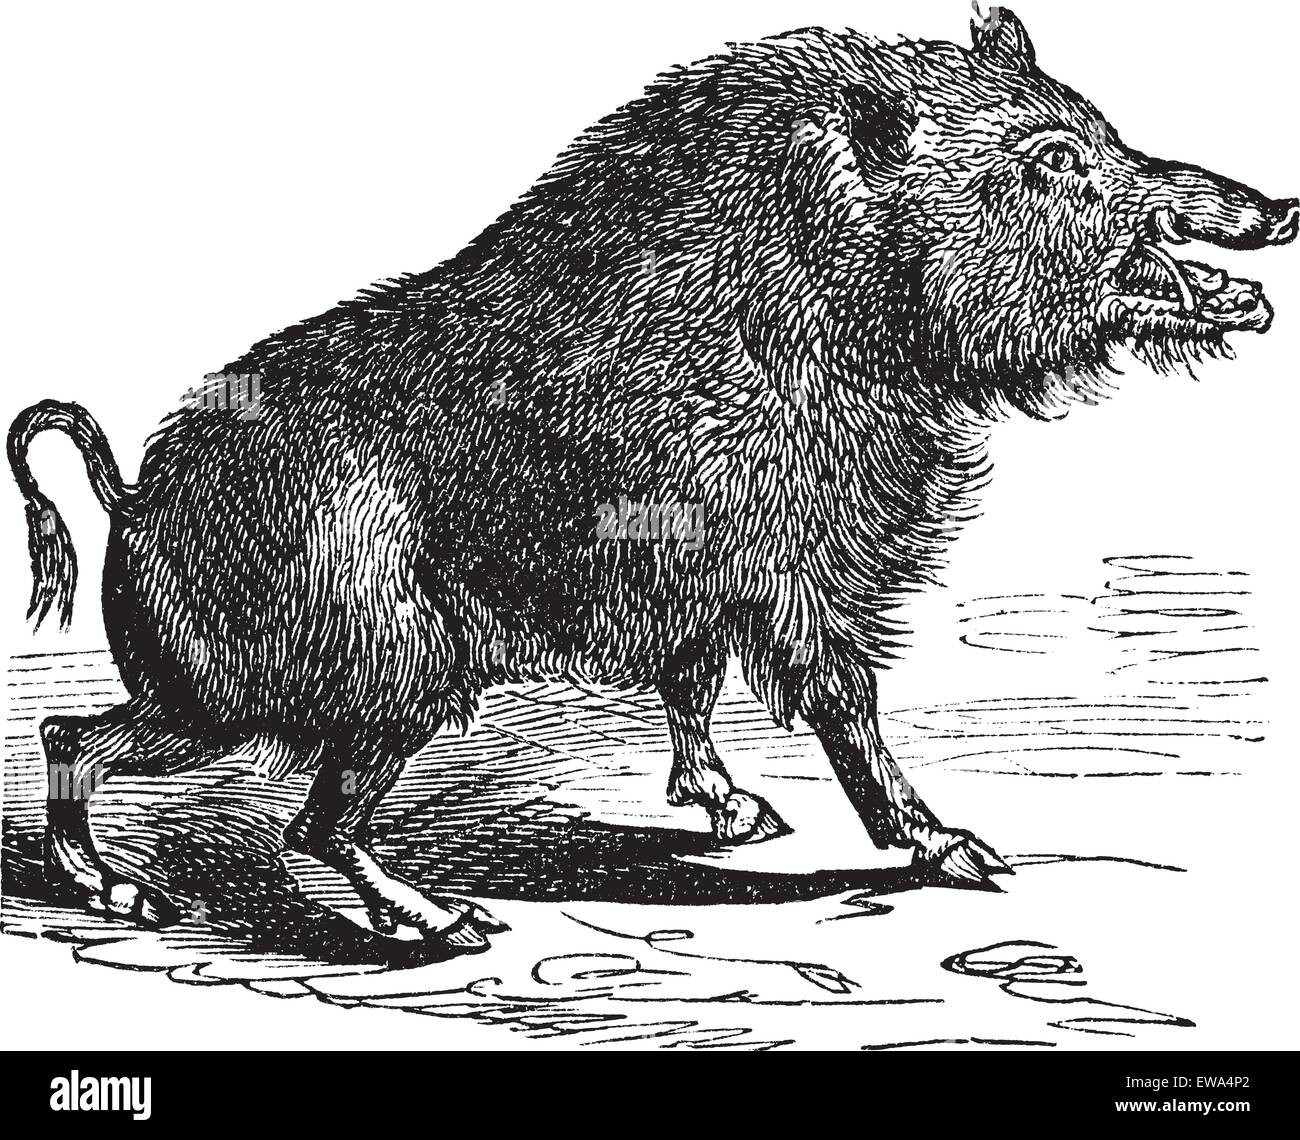 Wild boar or Sus scrofa or Wild pig or Wild hog or Razorback or Boar or European Boar, vintage engraving. Old engraved illustration of Wild boar. Stock Vector